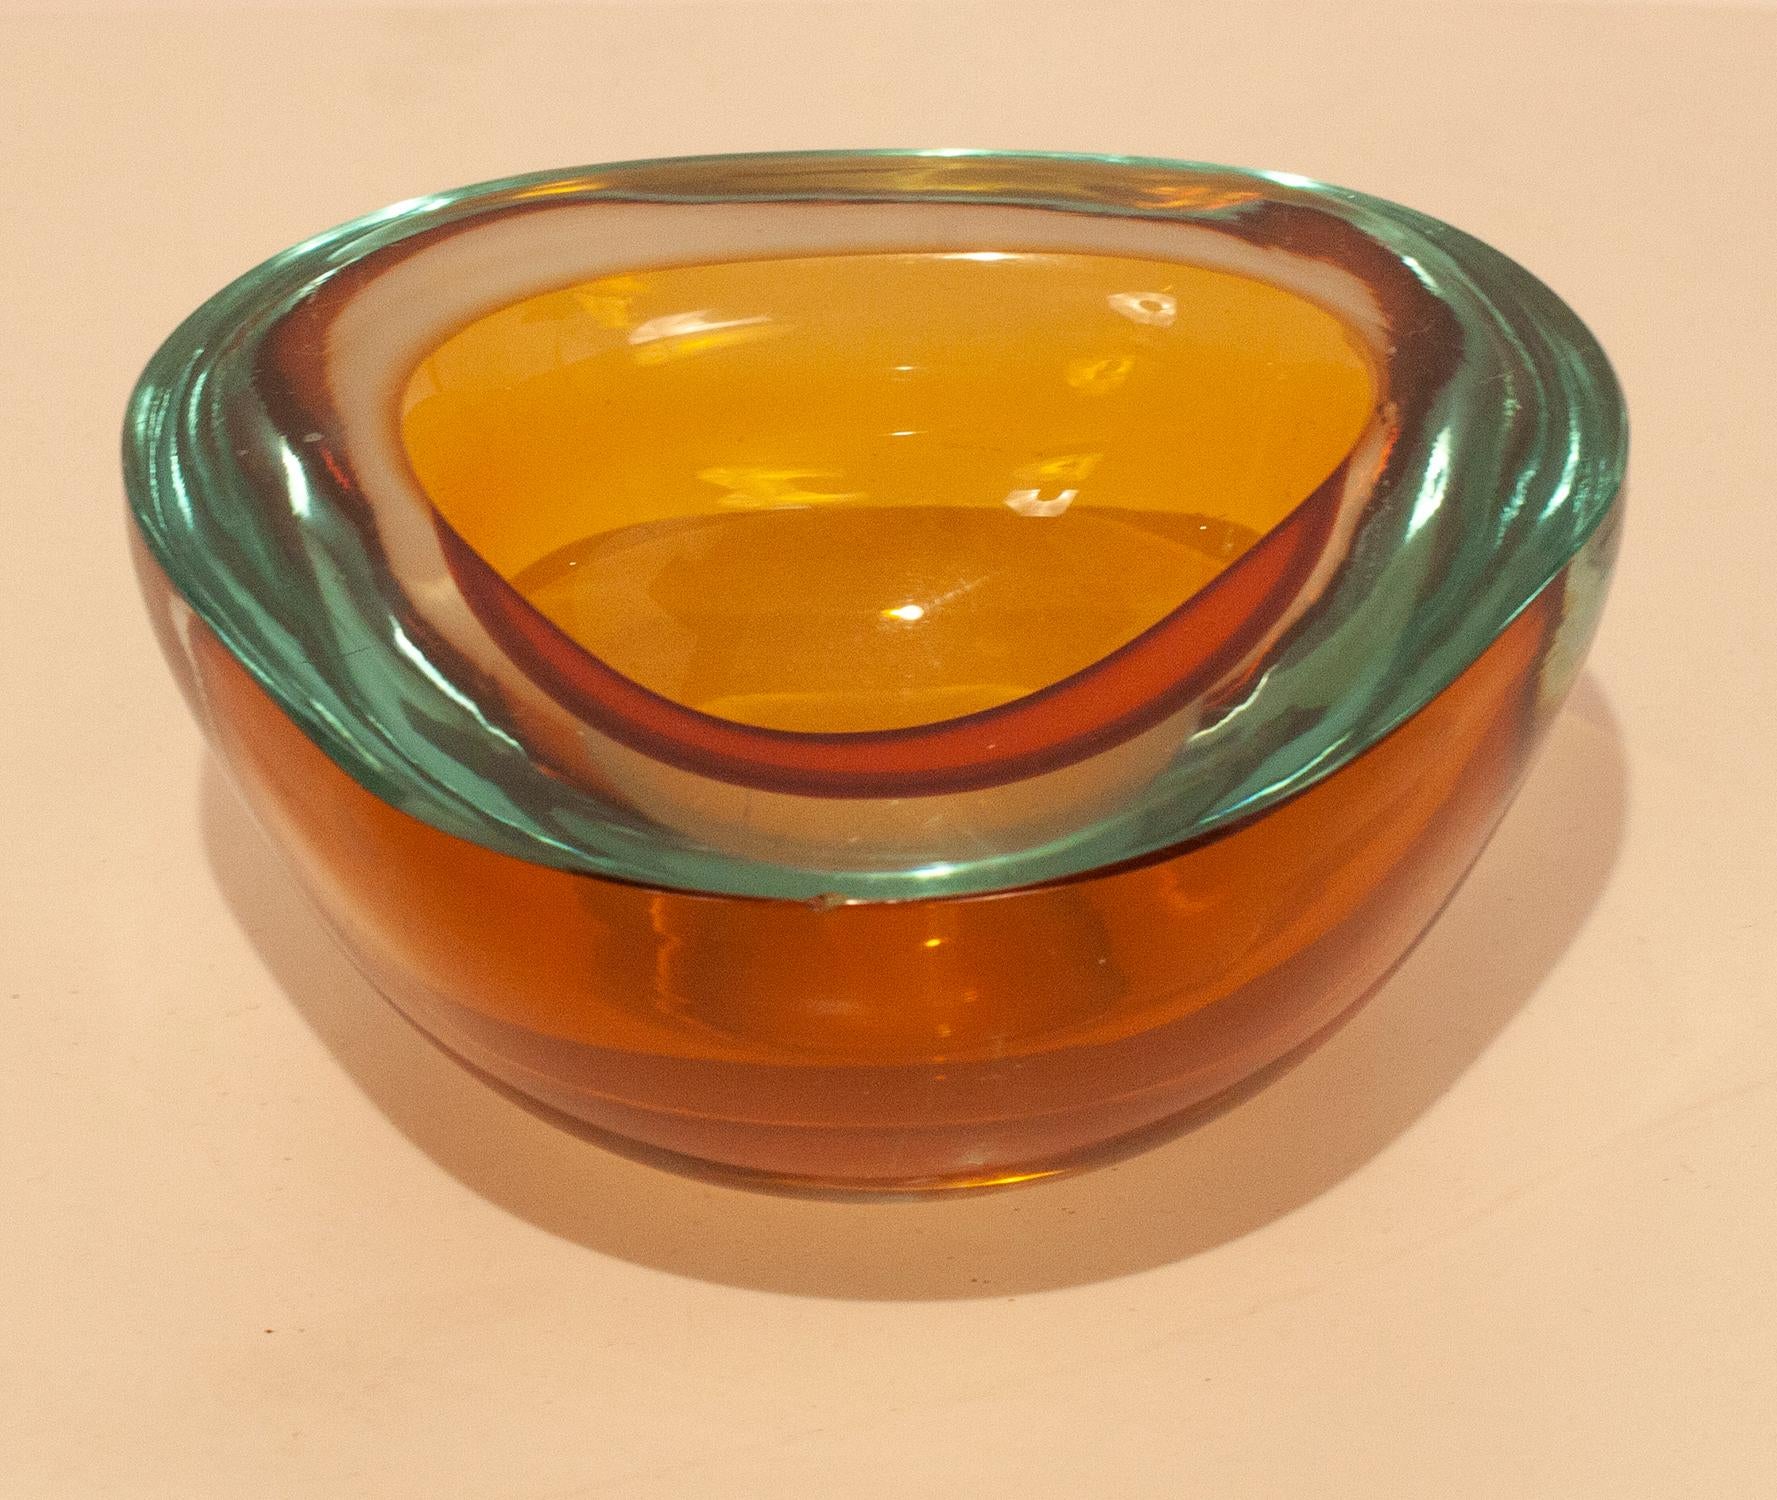 Midcentury Flavio Poli Seguso blue, brown Sommerso Murano art glass bowl, 1950s.